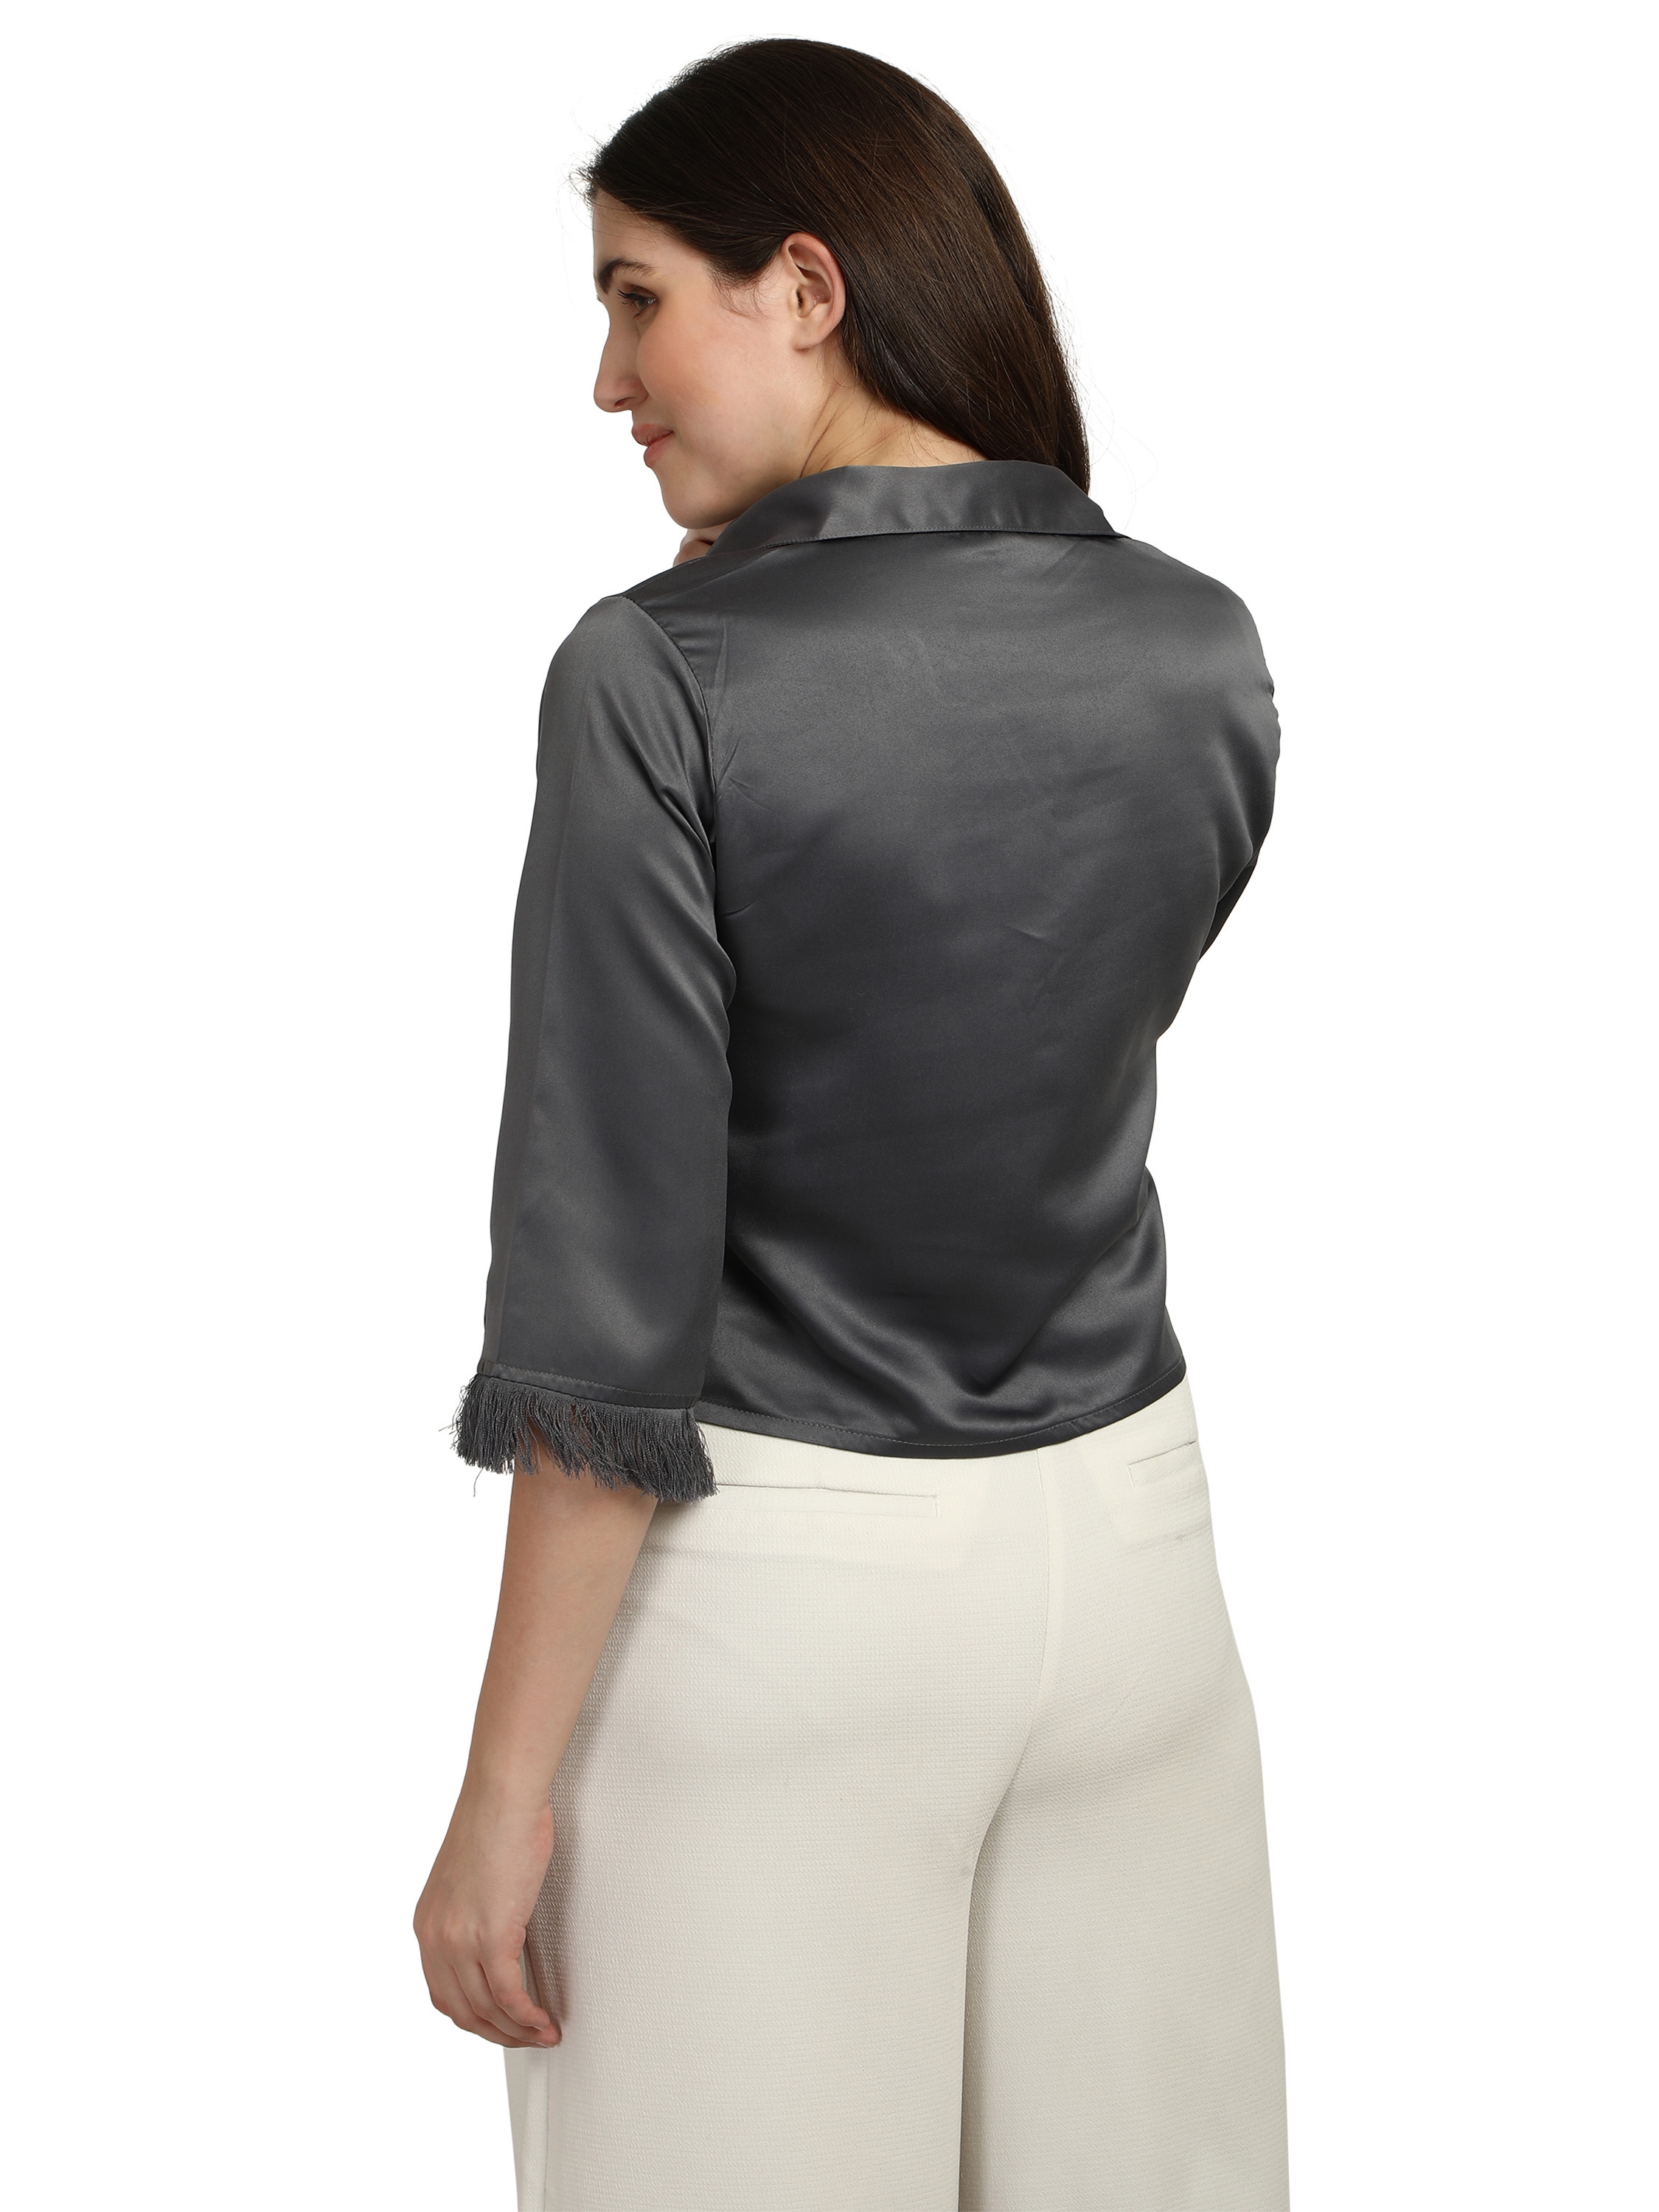 women's silk satin dark grey color button down tie up frill sleeves shirt.